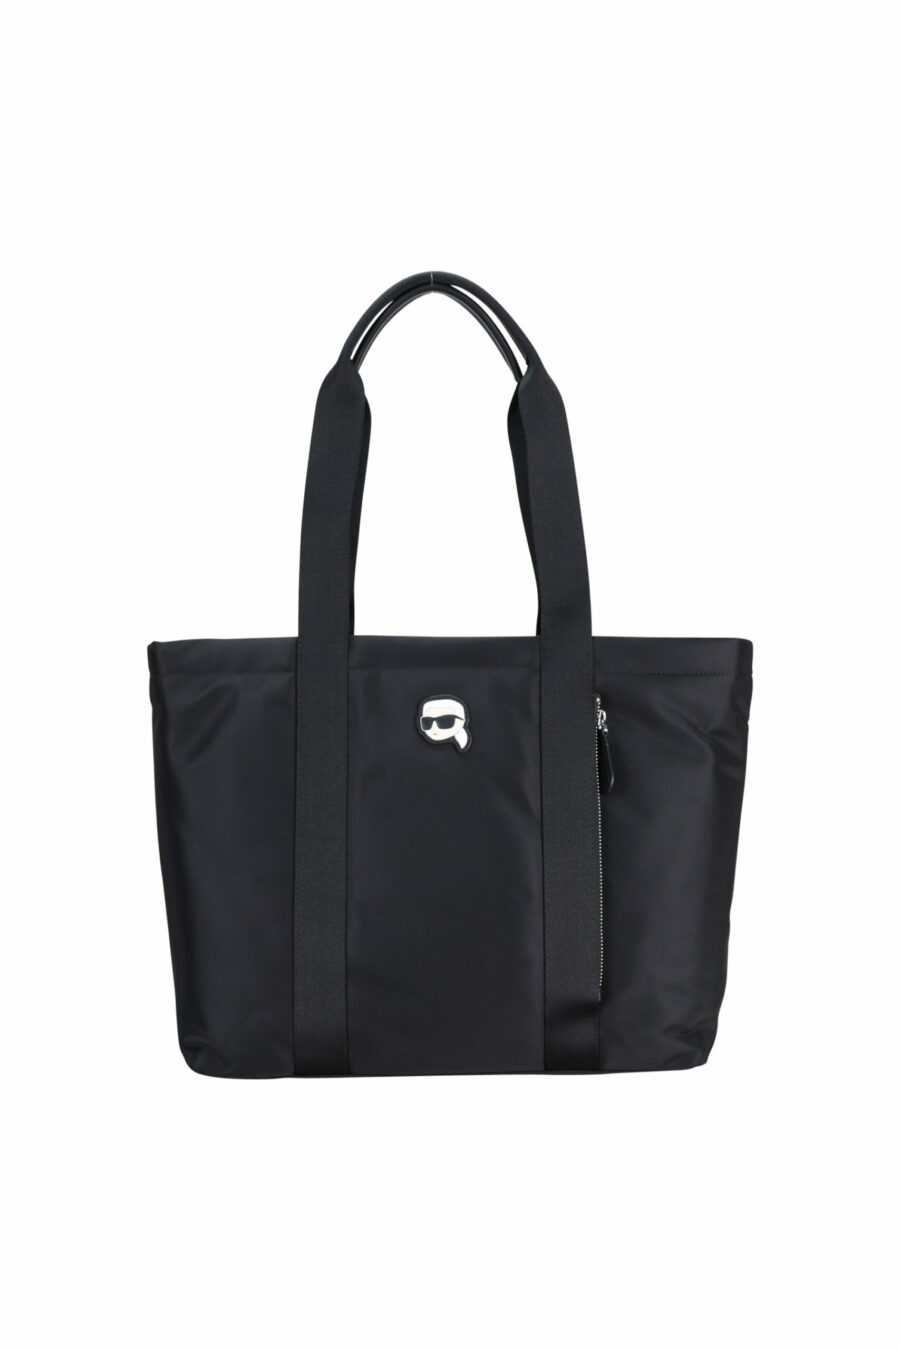 Black nylon tote bag with mini logo "karl" - 8720744417651 scaled